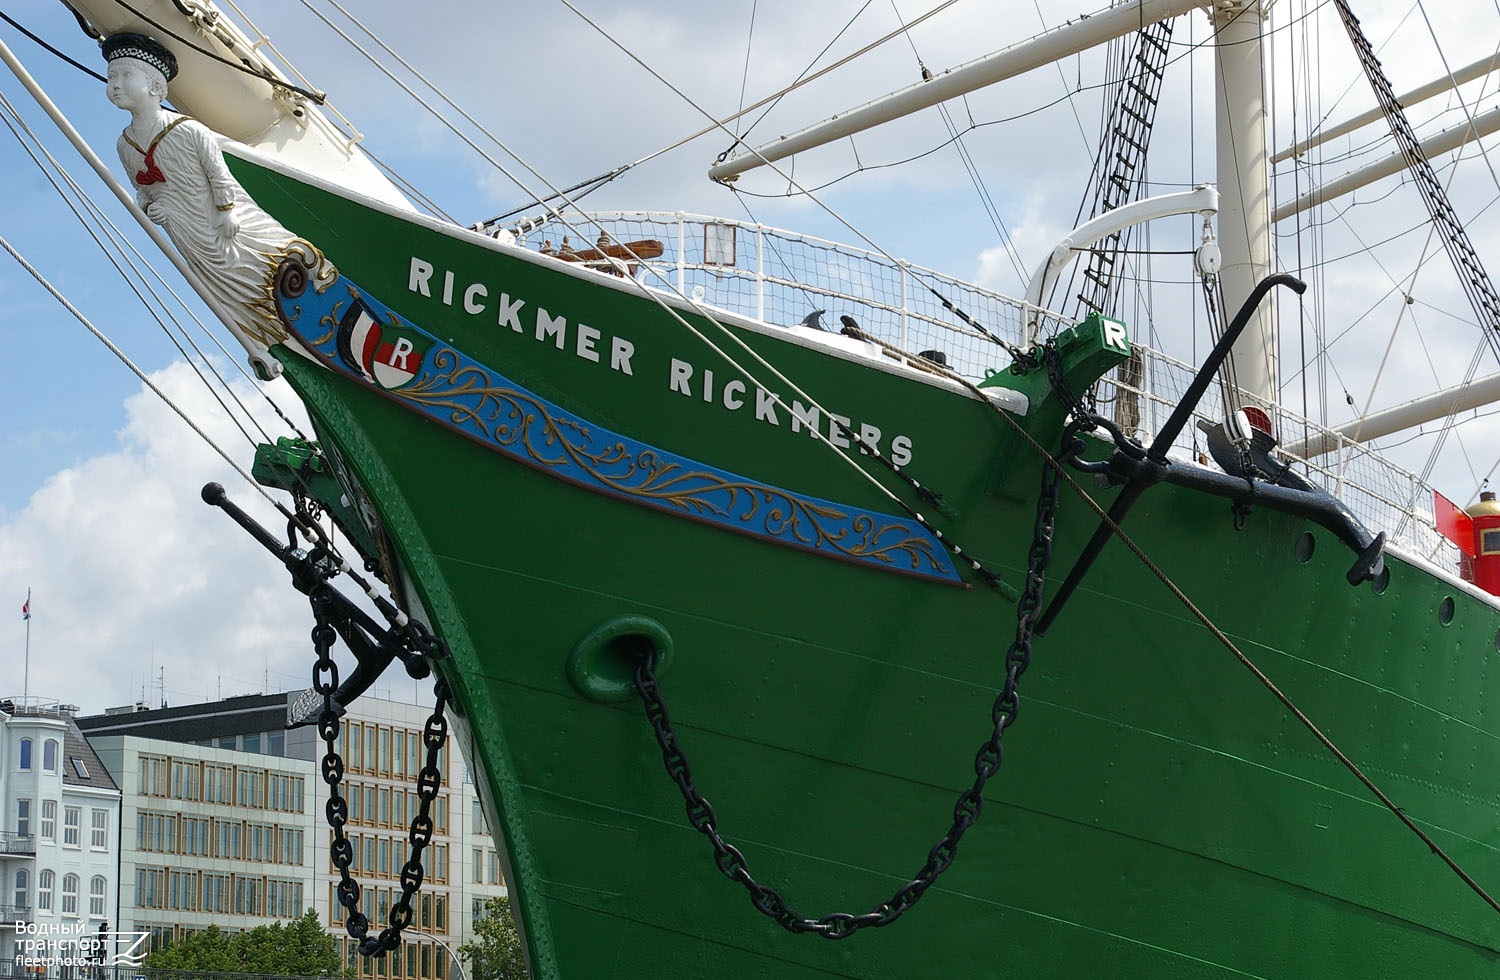 Rickmer Rickmers. Элементы и детали